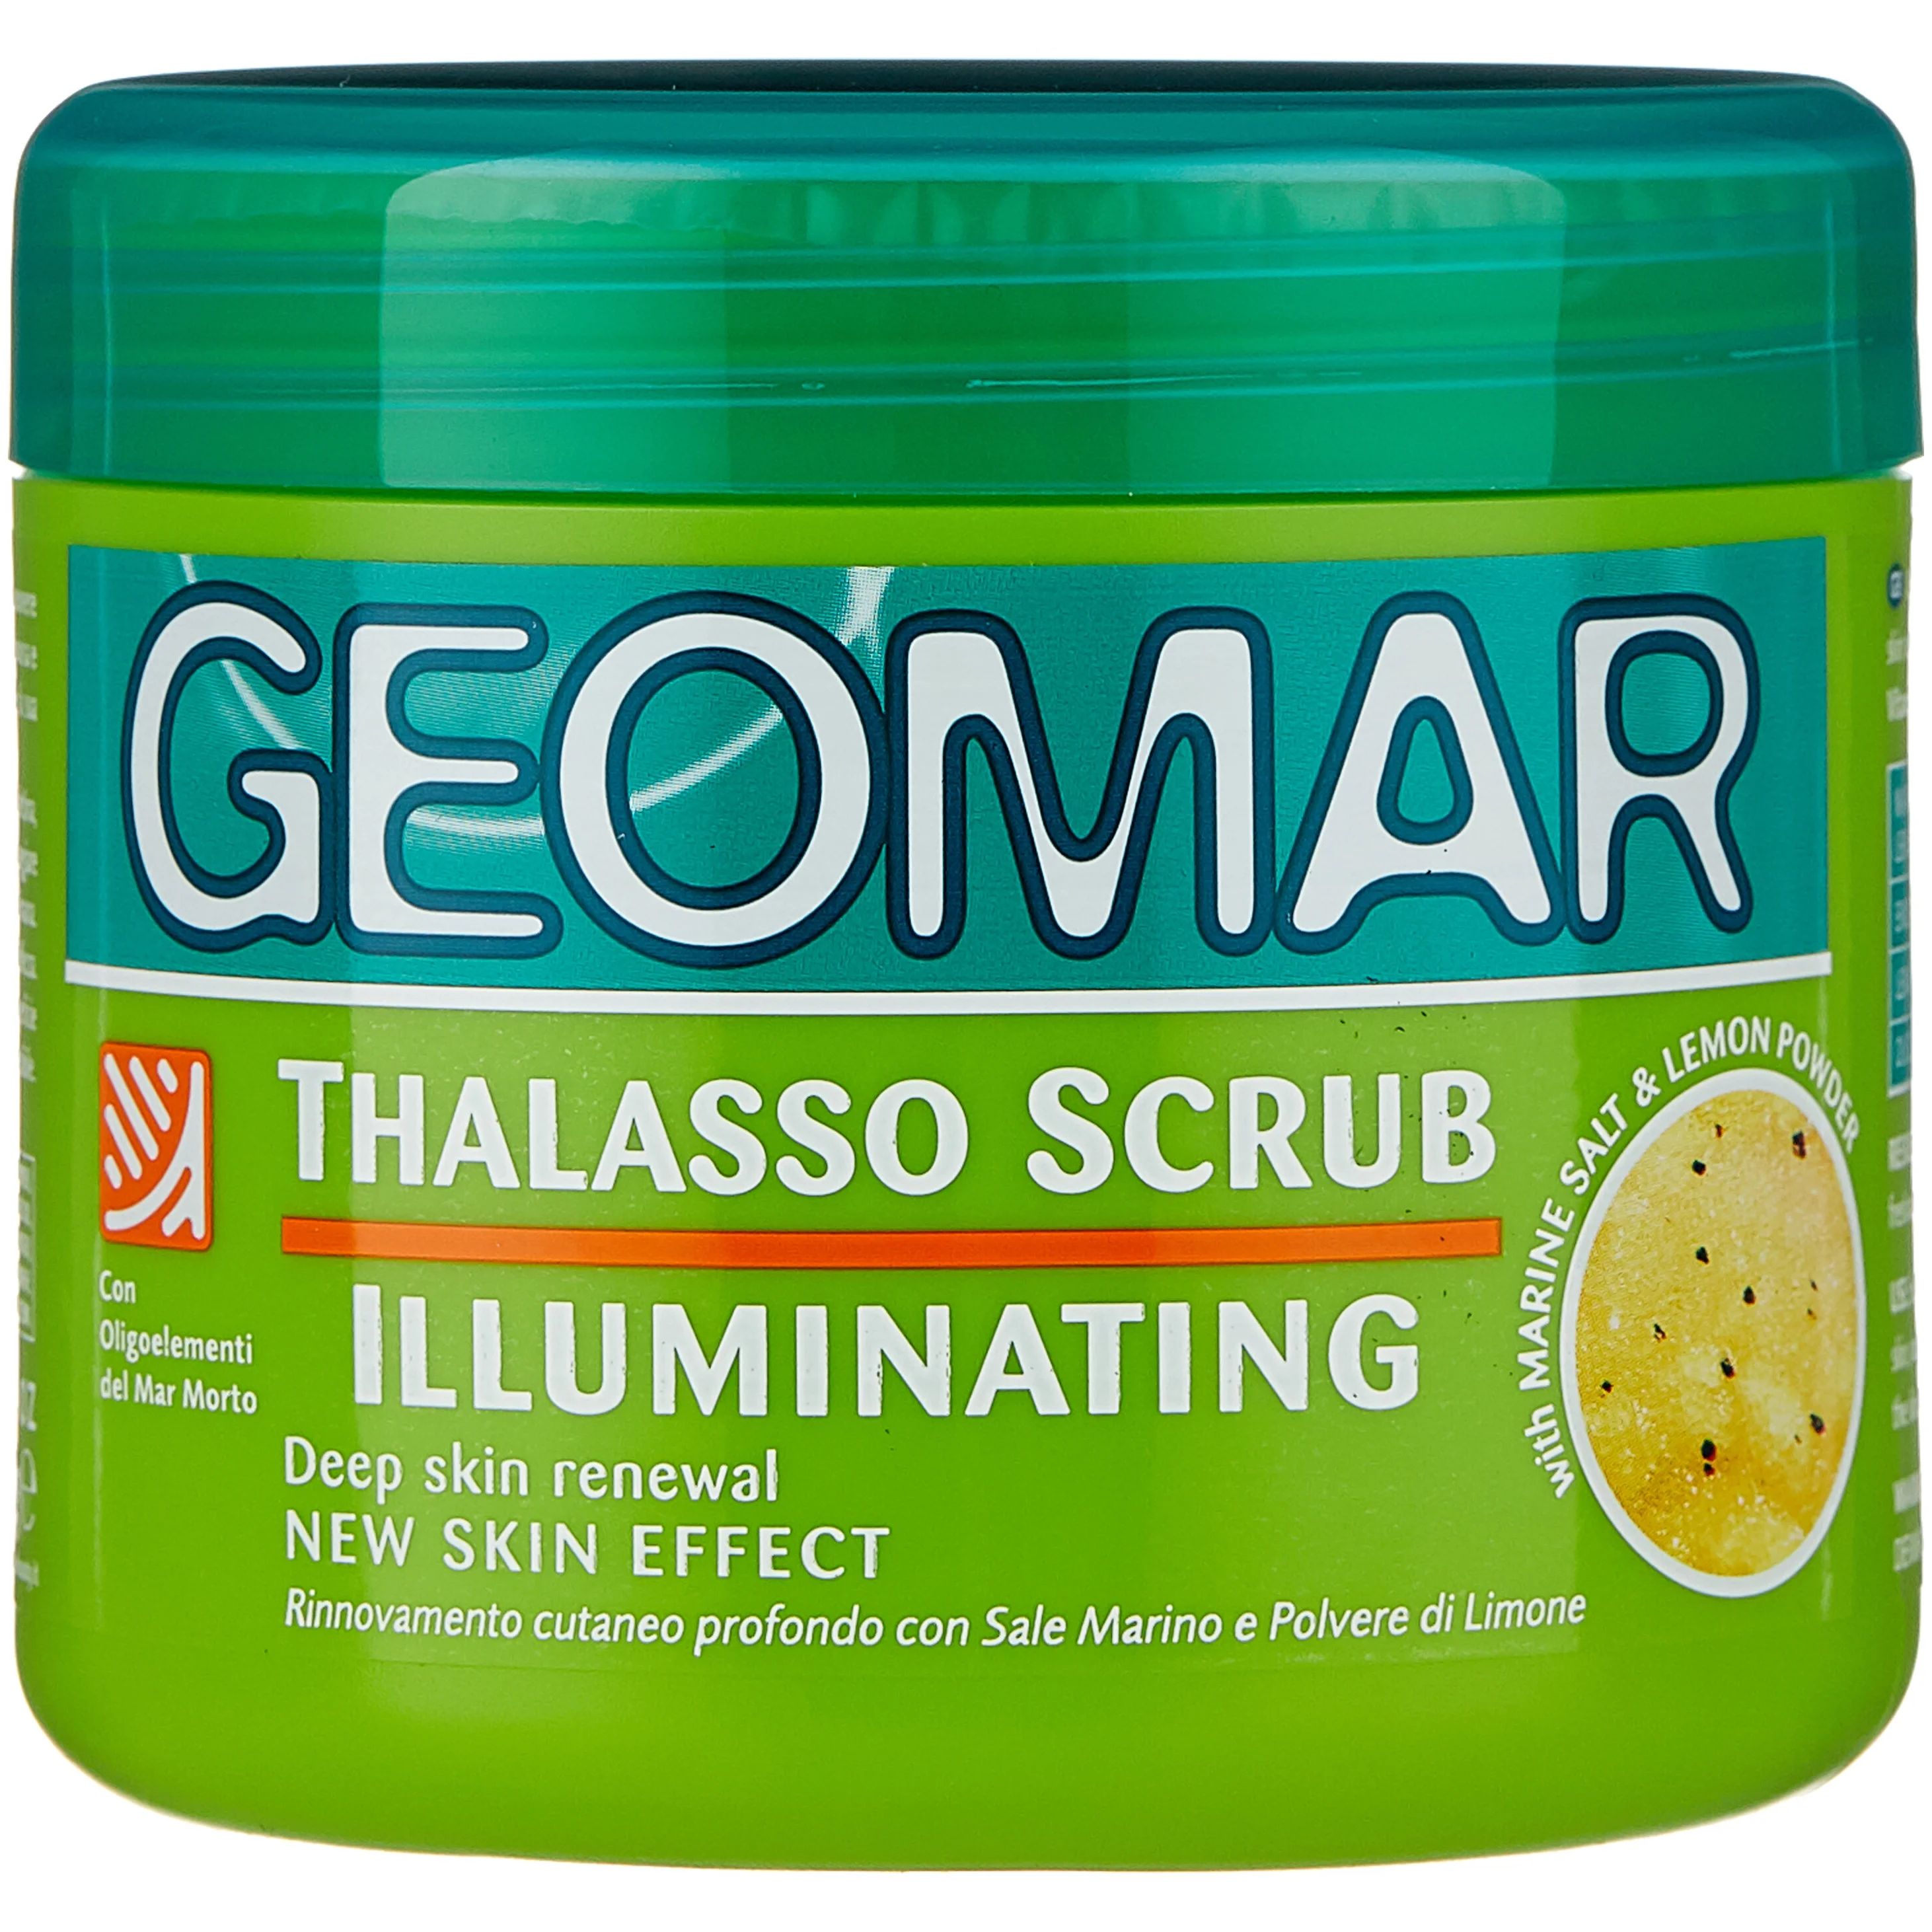 Скраб-талассо для тела Geomar Illuminating лимон 600г geomar восстанавливающий талассо скраб для тела с морской солью 600 0